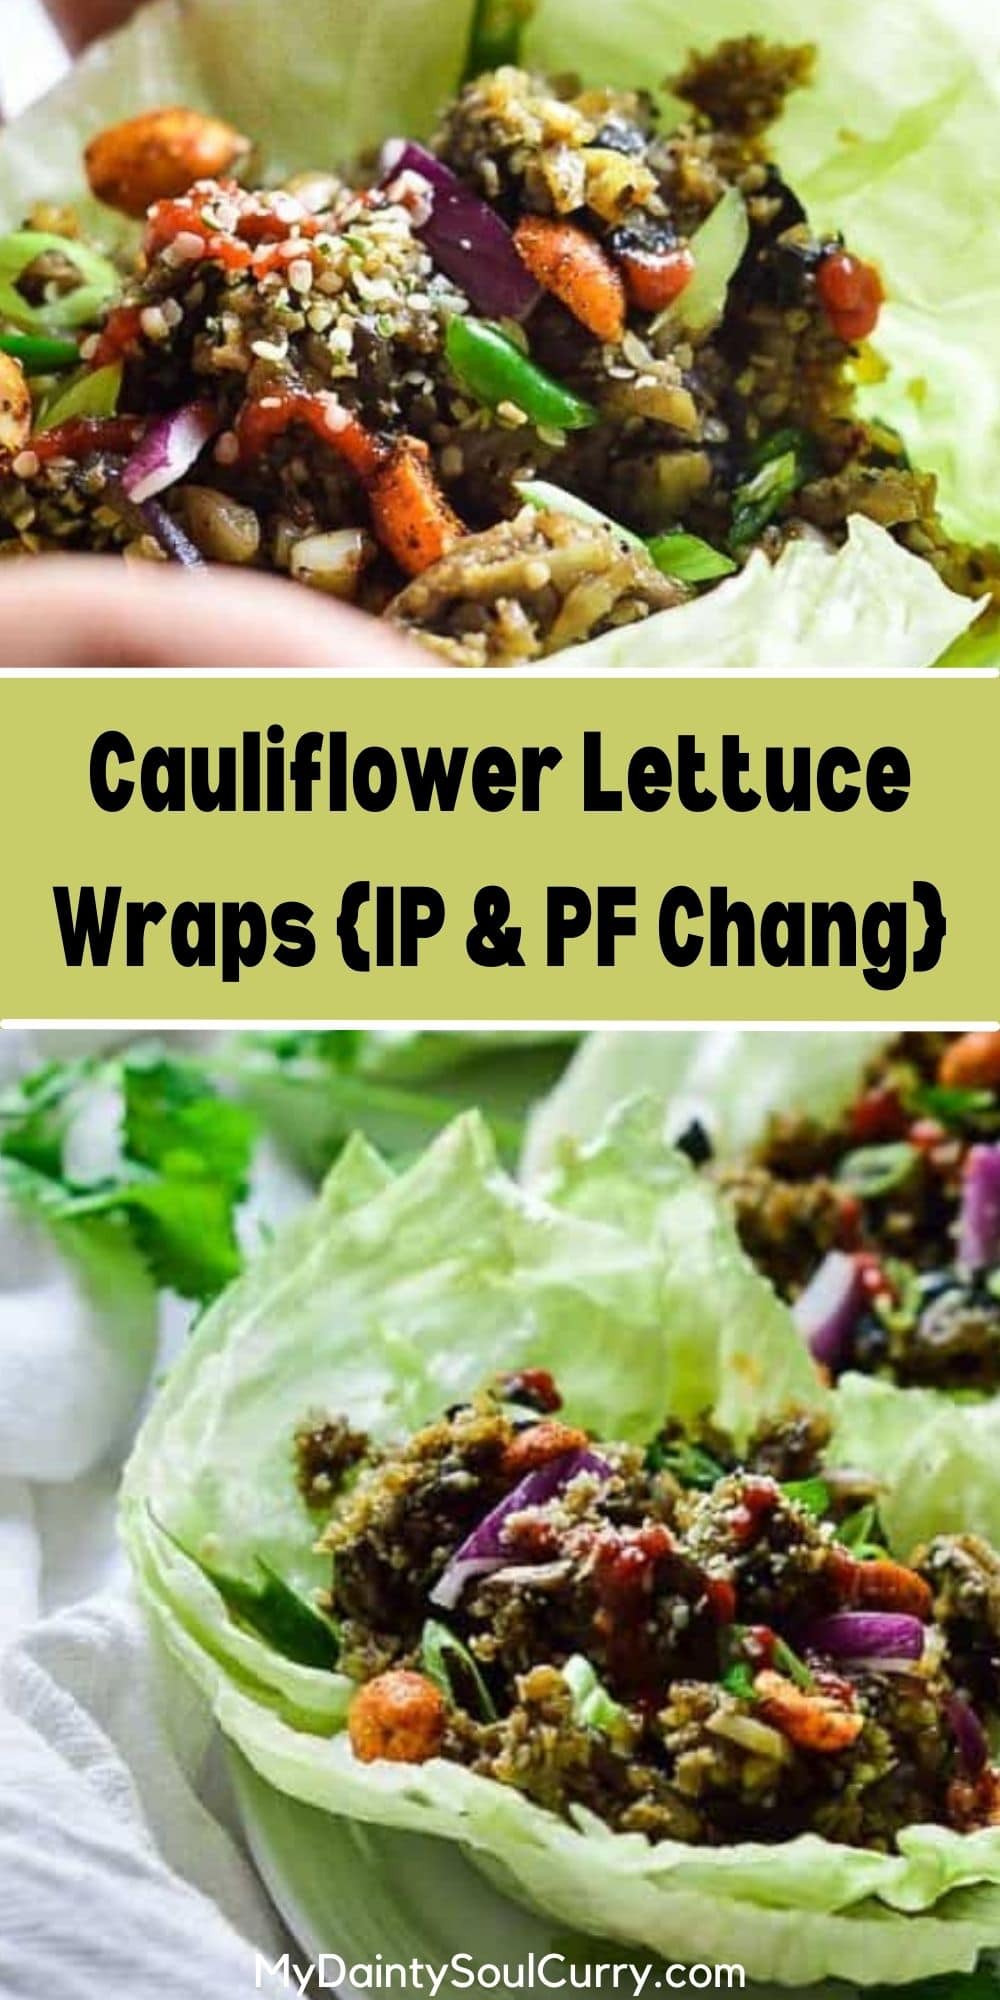 Cauliflower Lettuce Wraps {IP & PF Chang} - My Dainty Soul Curry